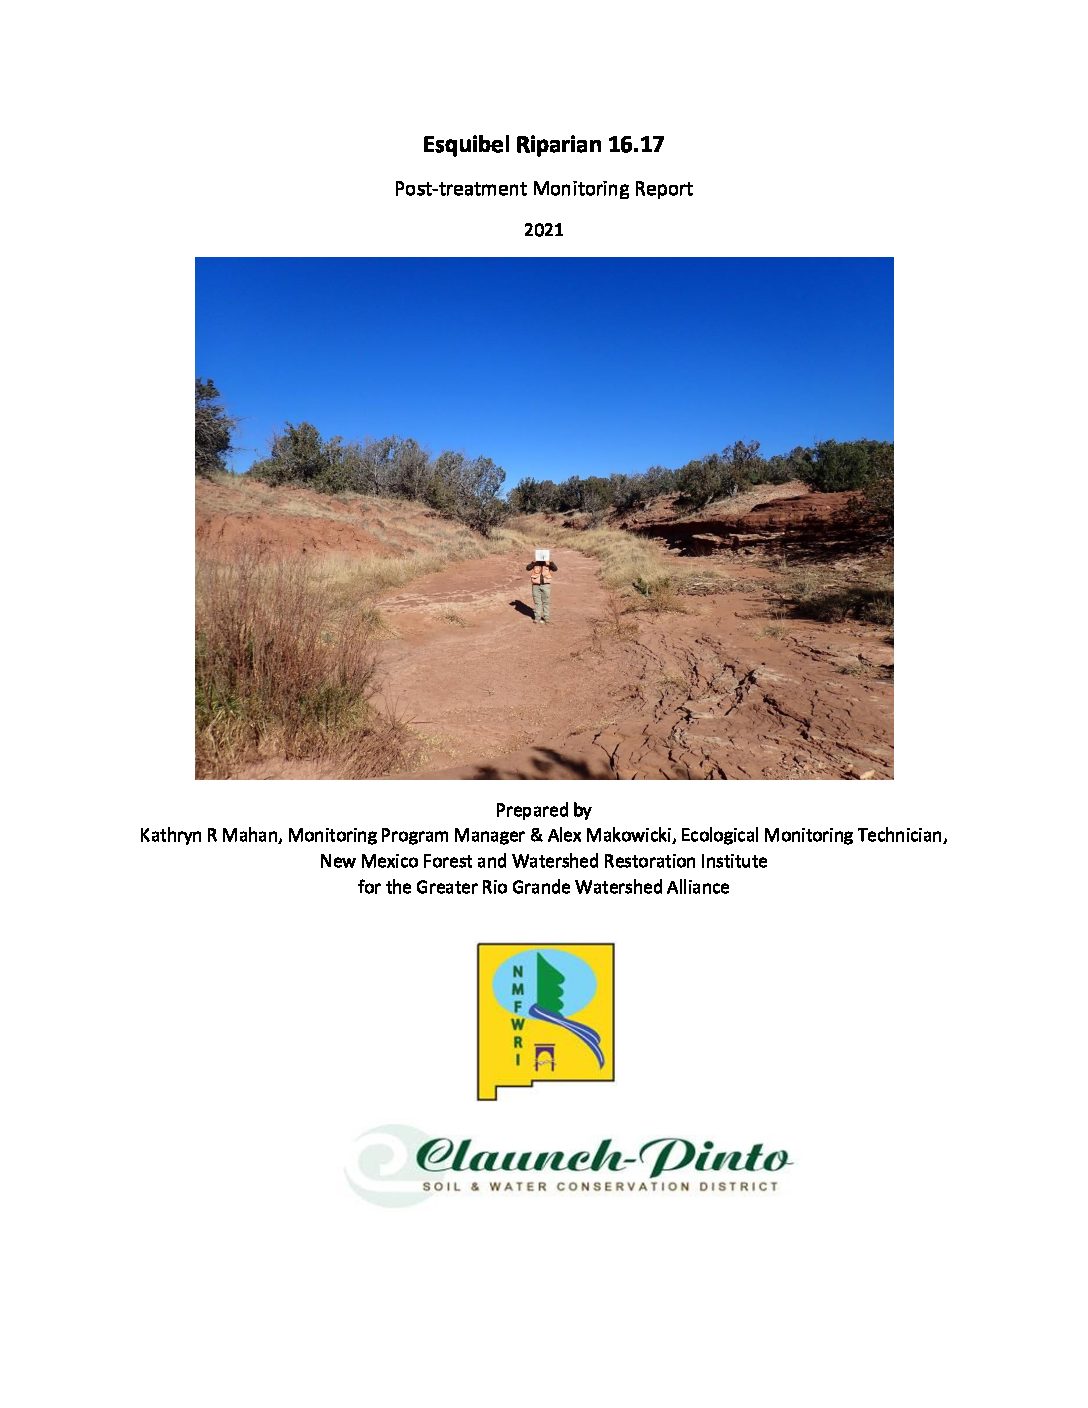 Esquibel Riparian 16.17 Post-treatment Monitoring Report 2021